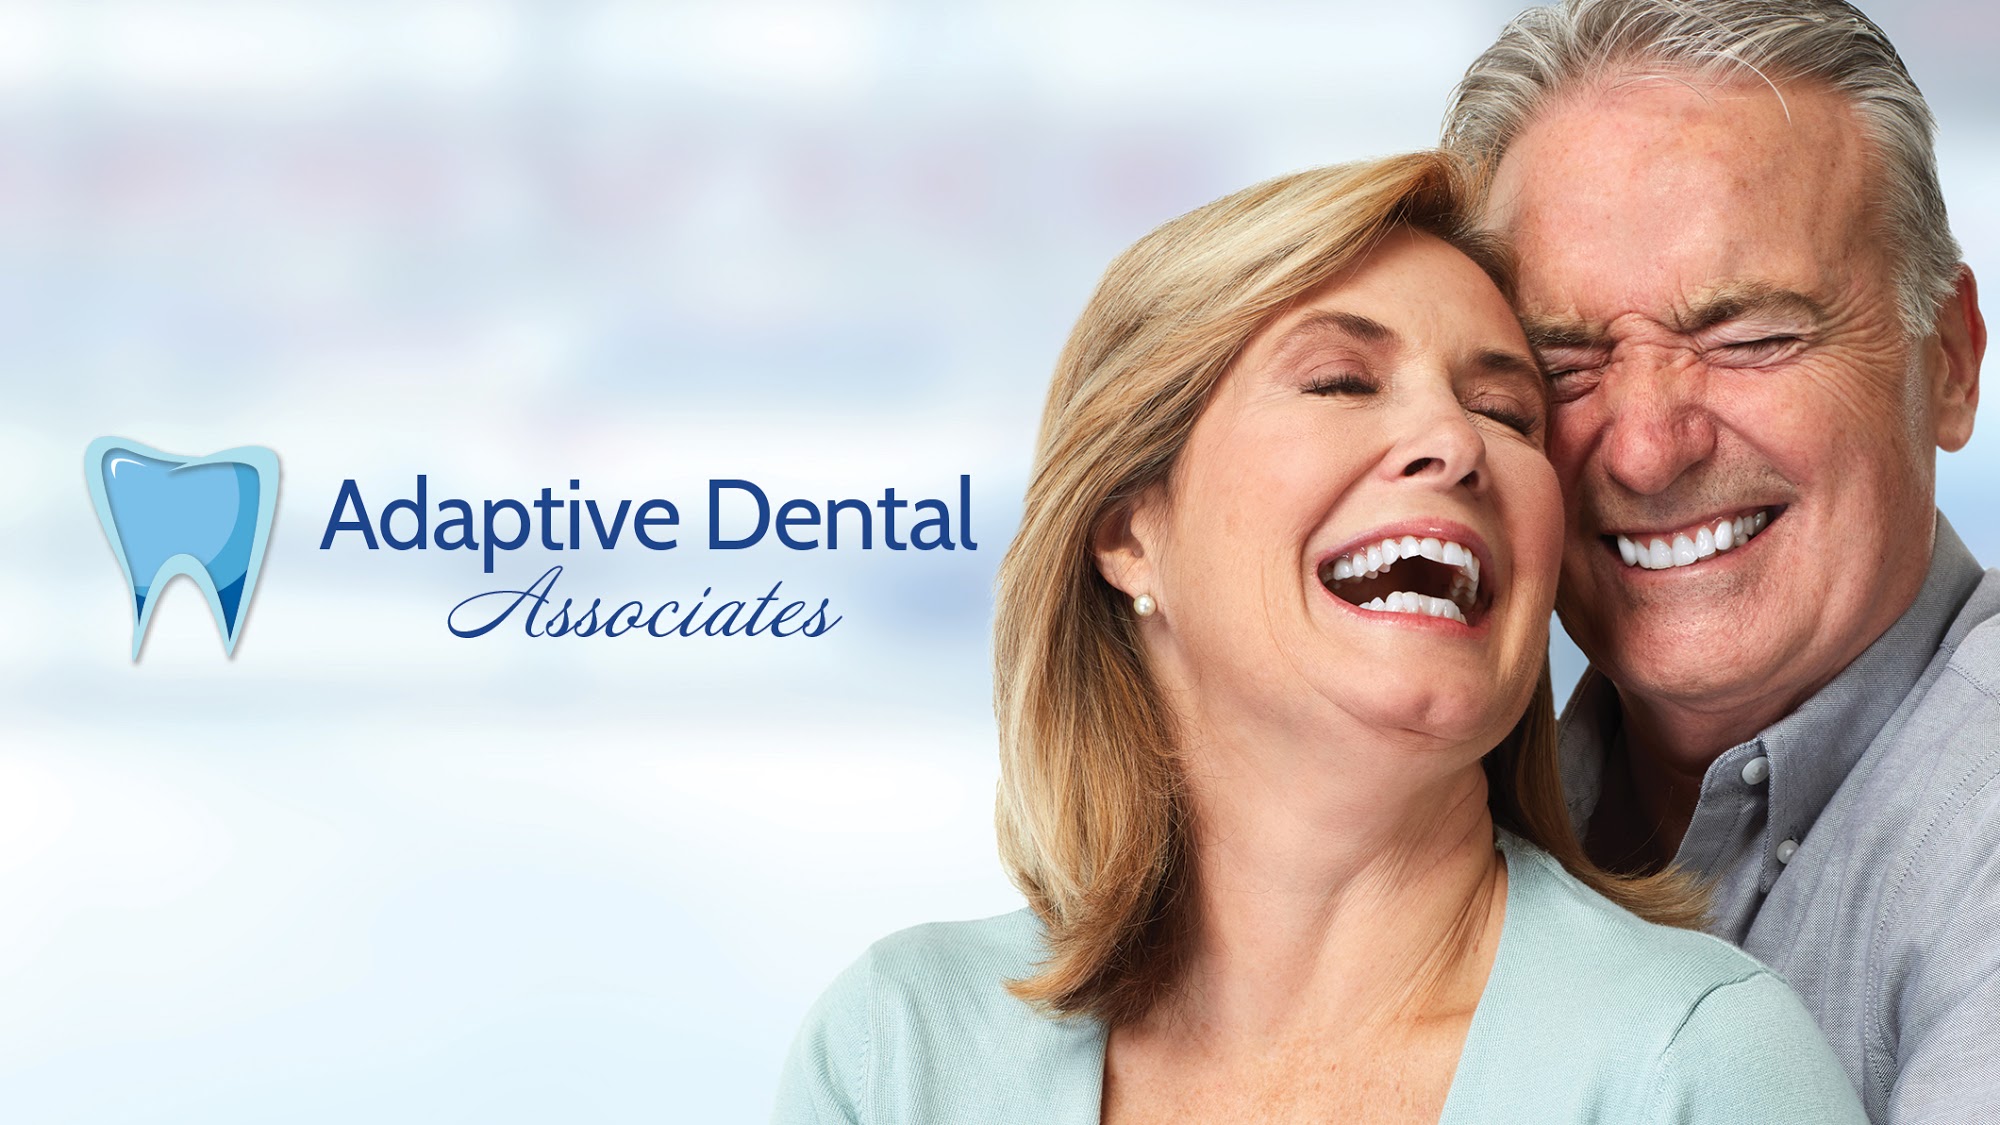 Adaptive Dental Associates